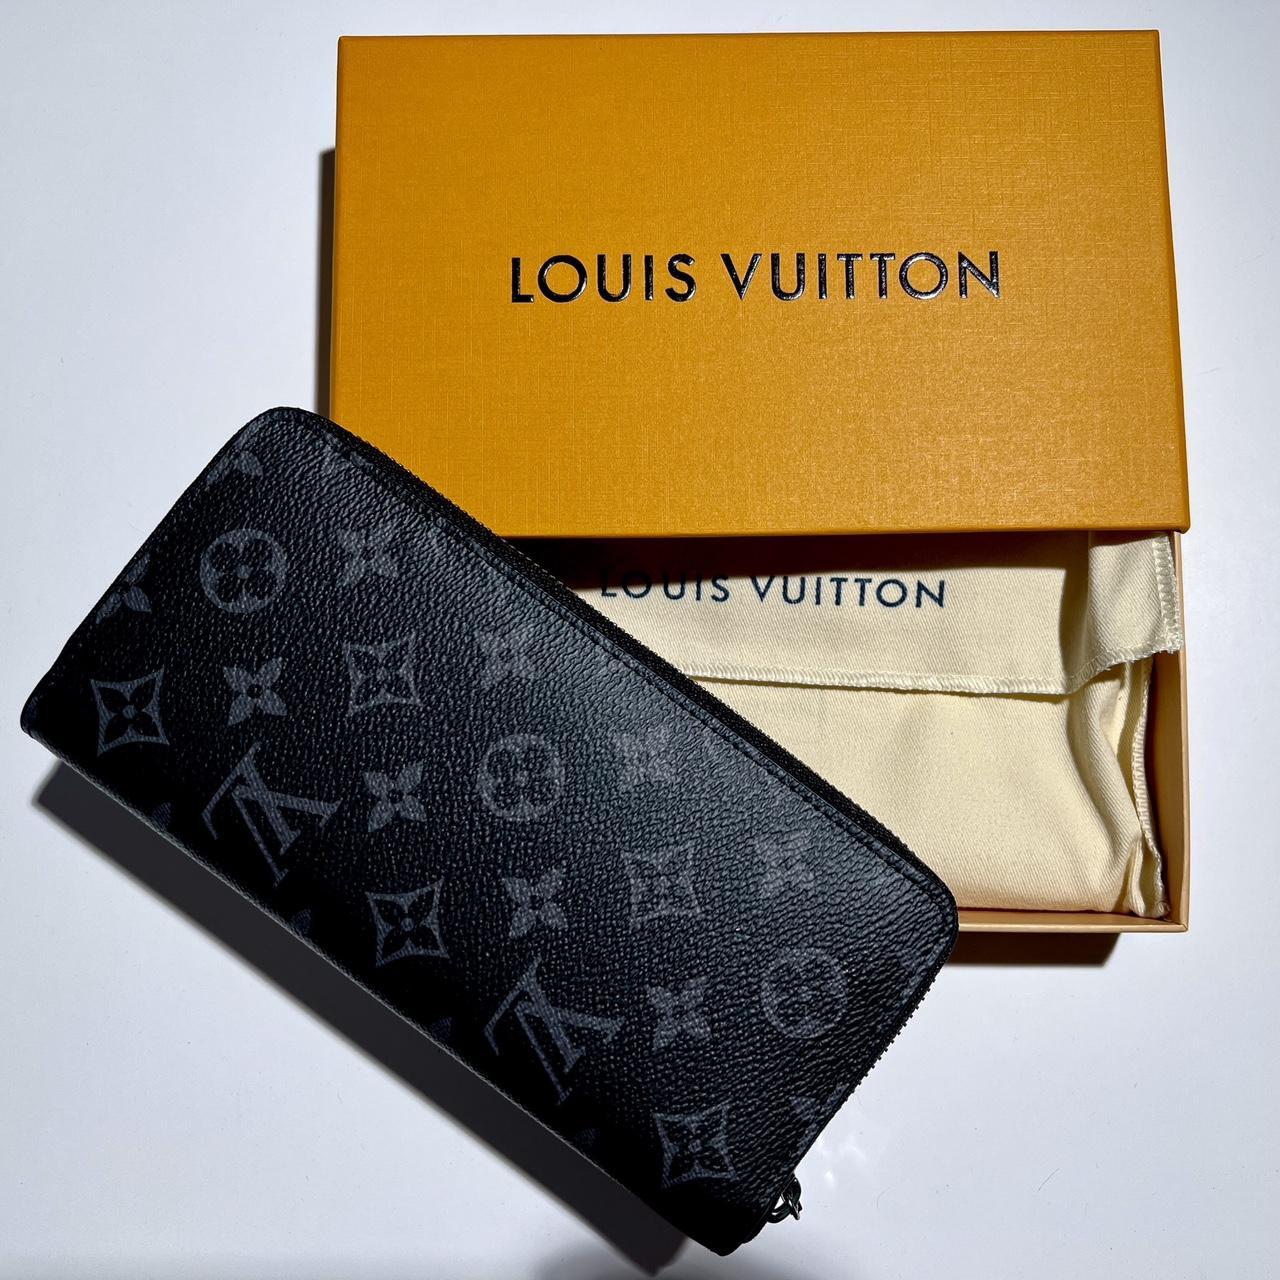 Shop Louis Vuitton ZIPPY WALLET Zippy wallet vertical (M62295) by